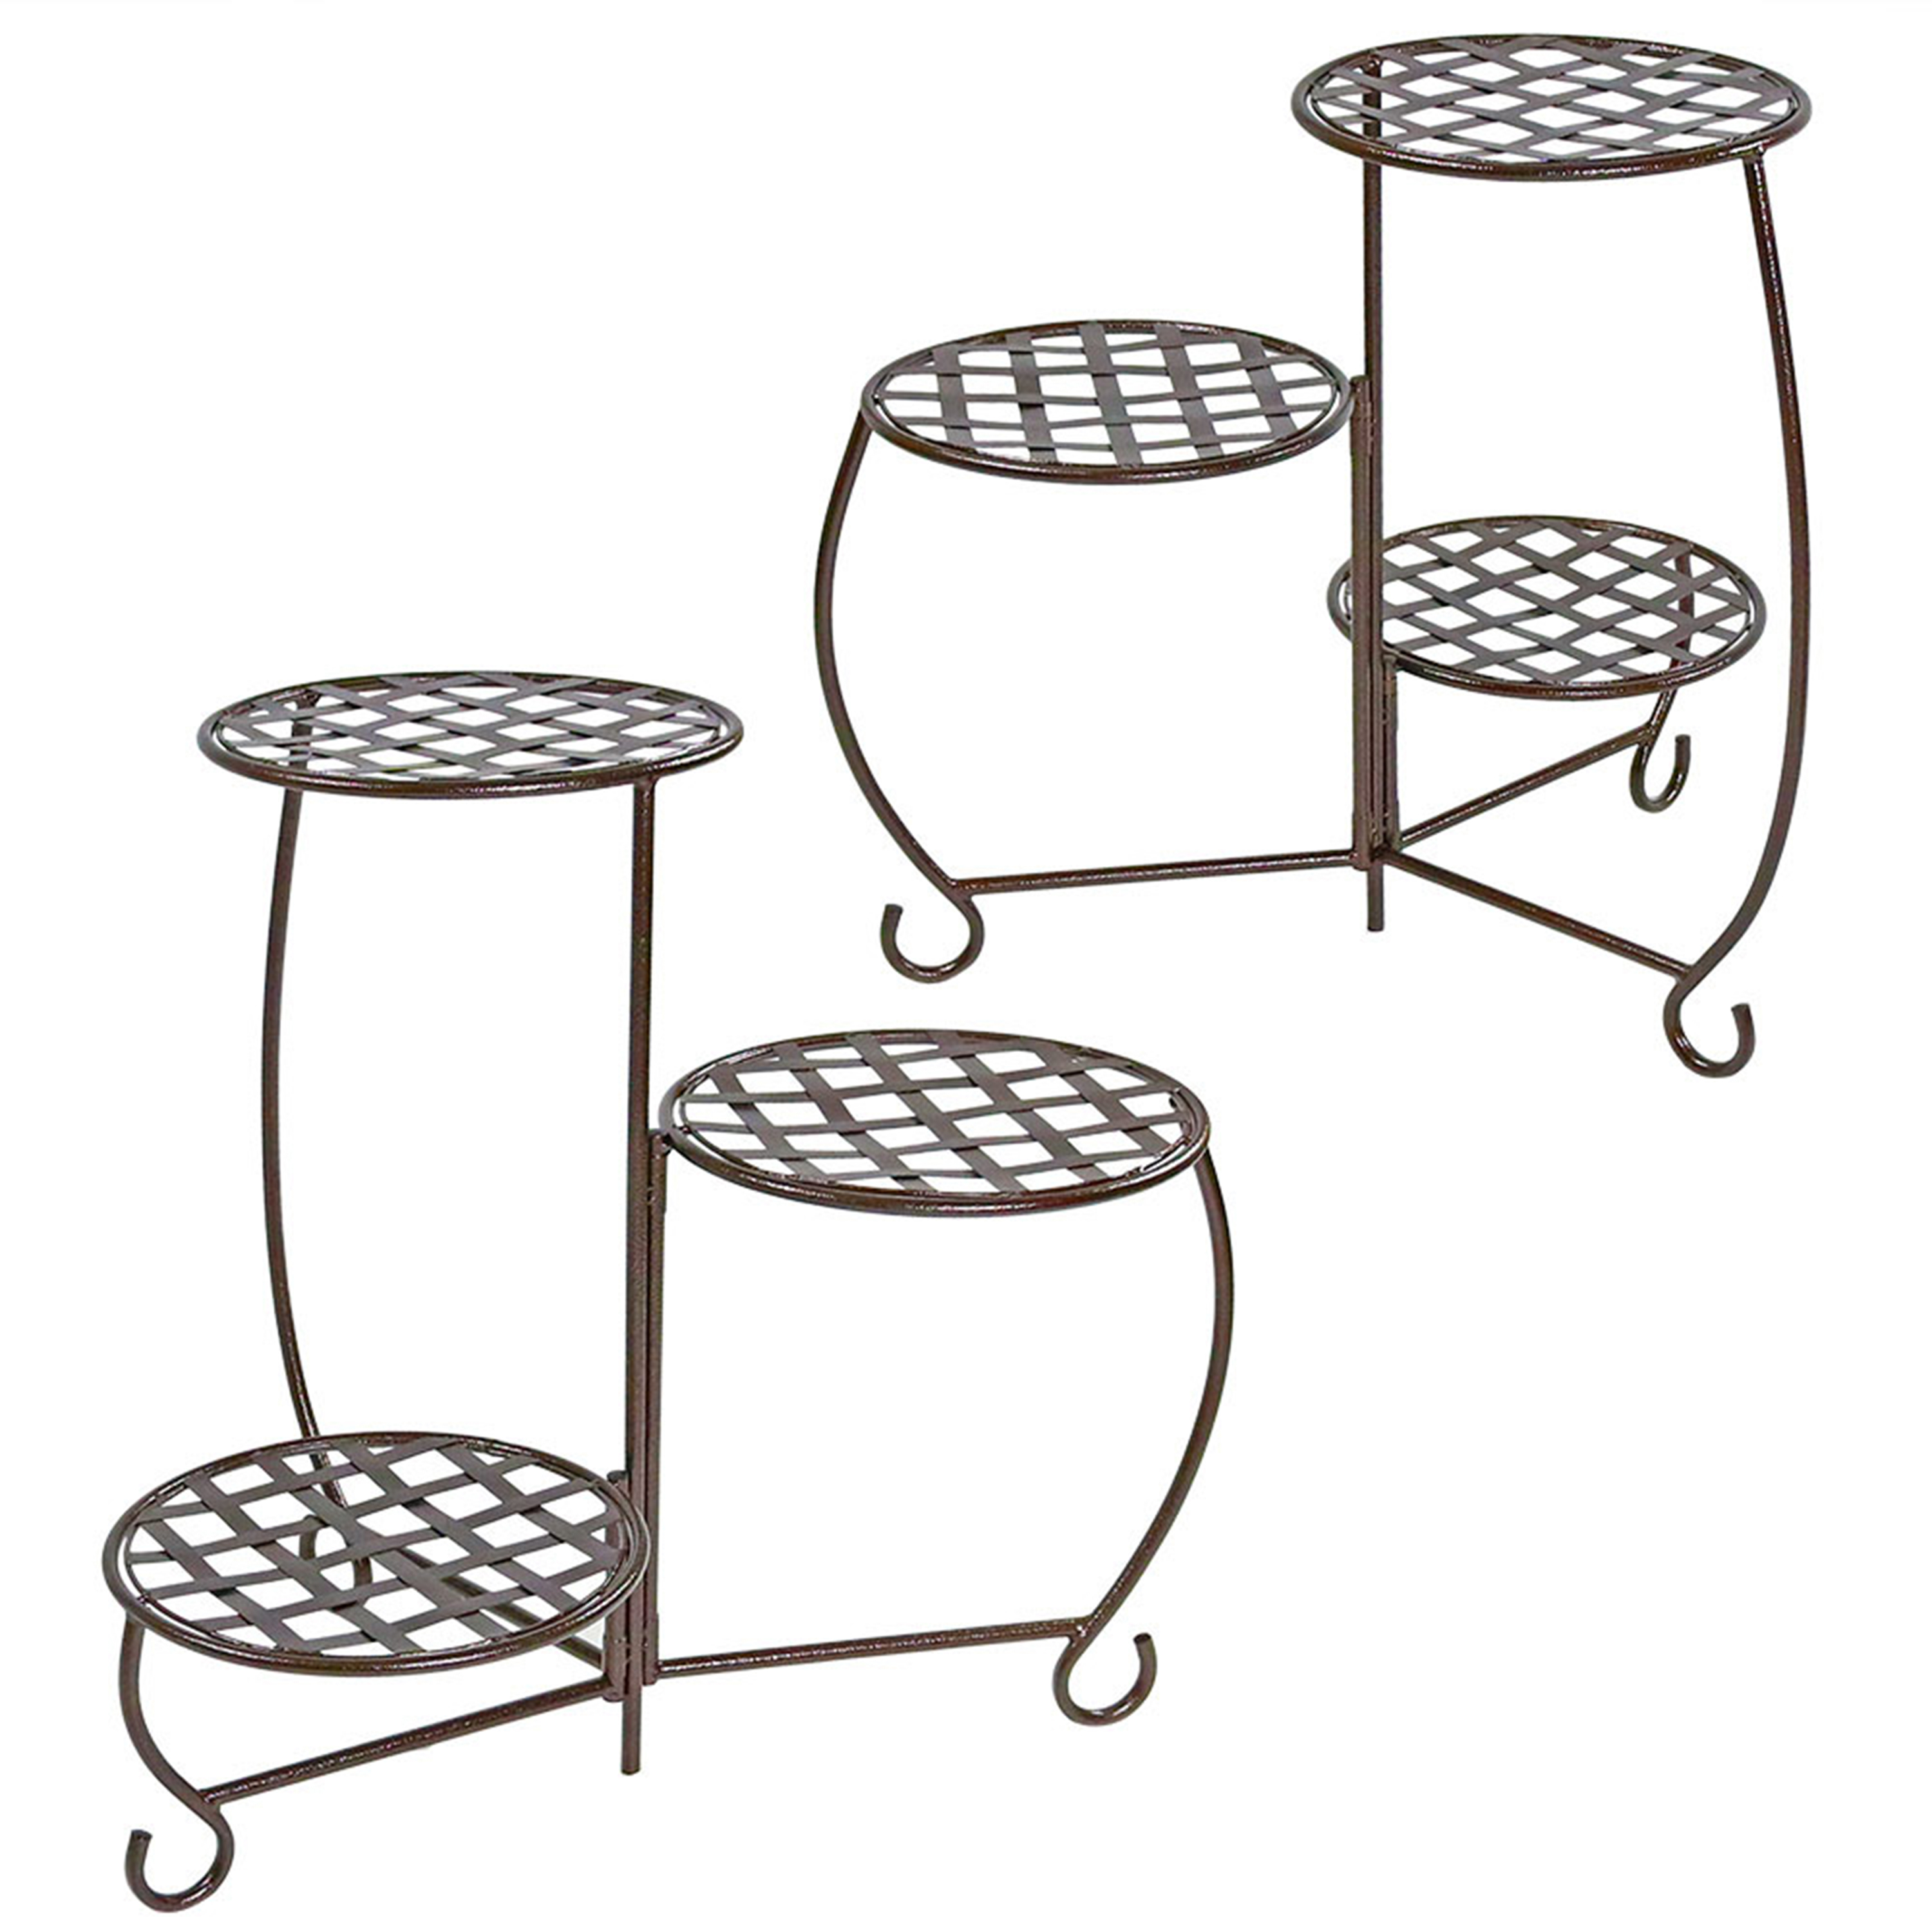 Sunnydaze Checkered Triple Planter Stand - Bronze - Set of 2